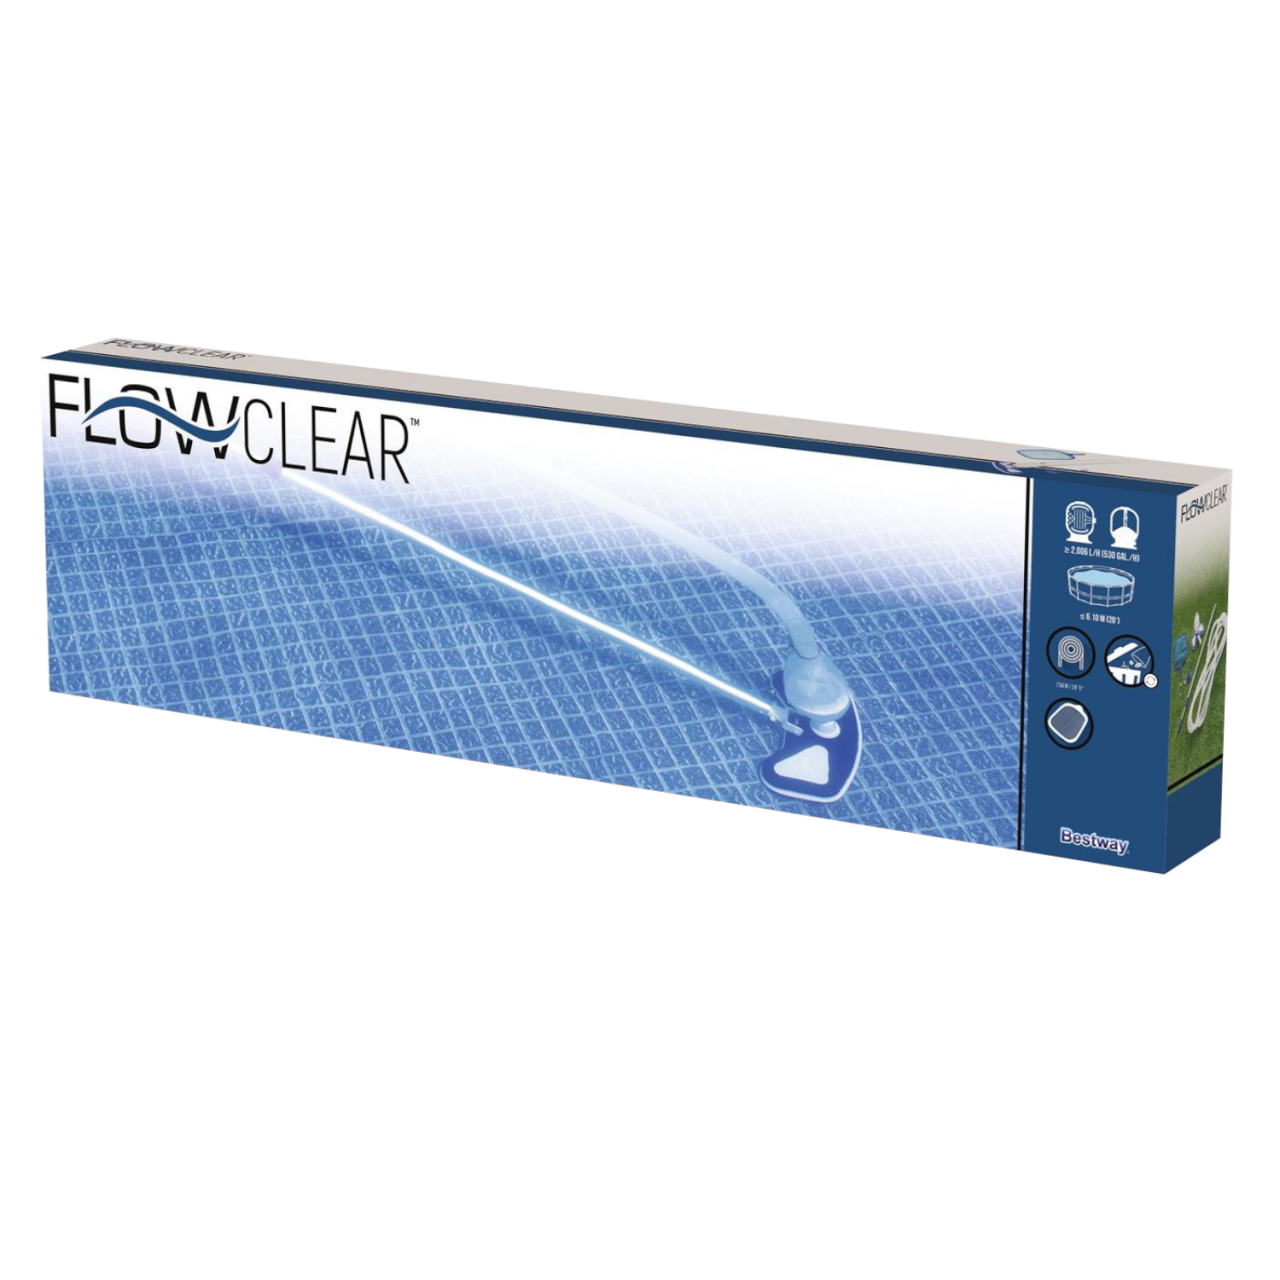 Bestway 58234 Flowclear Poolpflege Basis-Set Aquaclean pumpenbetriebenem Poolsauger + Kescher